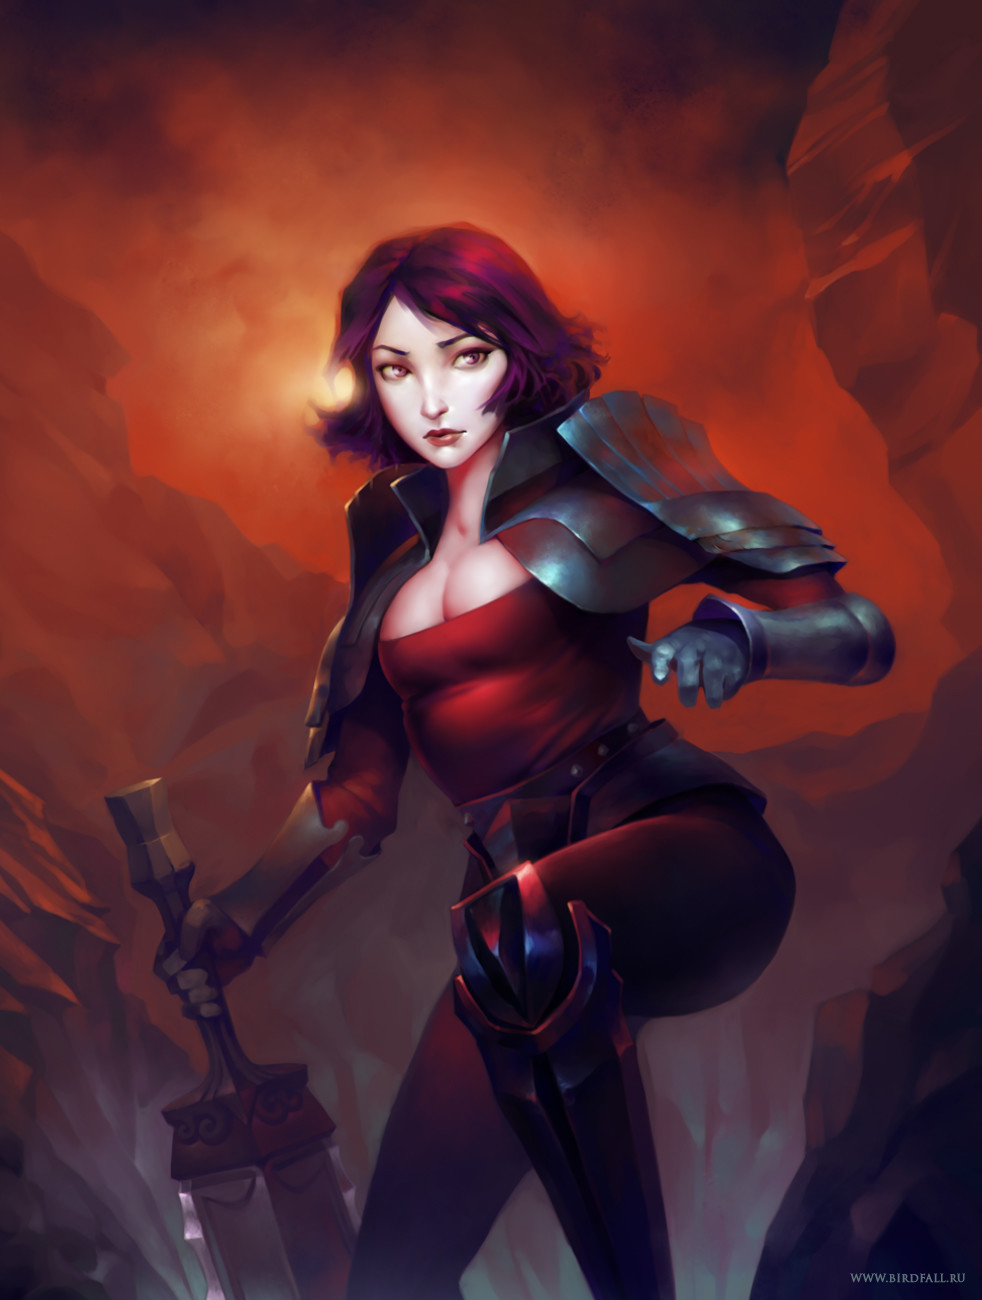 Max Birdfall Women Redhead Armor Rocks Sword Fantasy Girl Red 982x1300